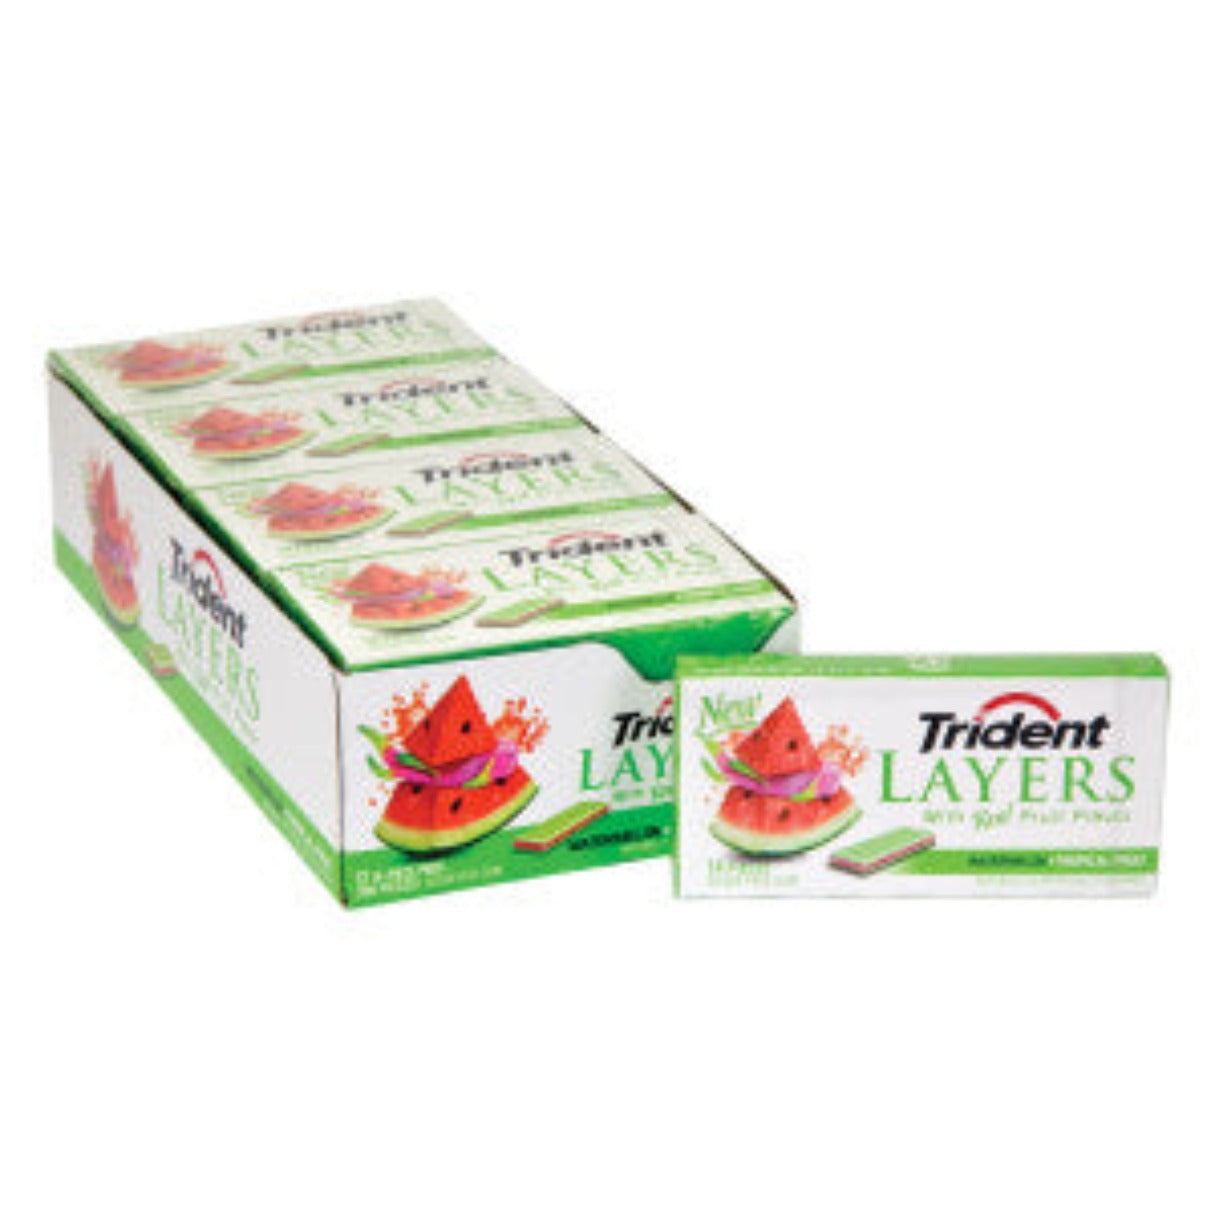 Trident Layers Watermelon Gum - 12ct